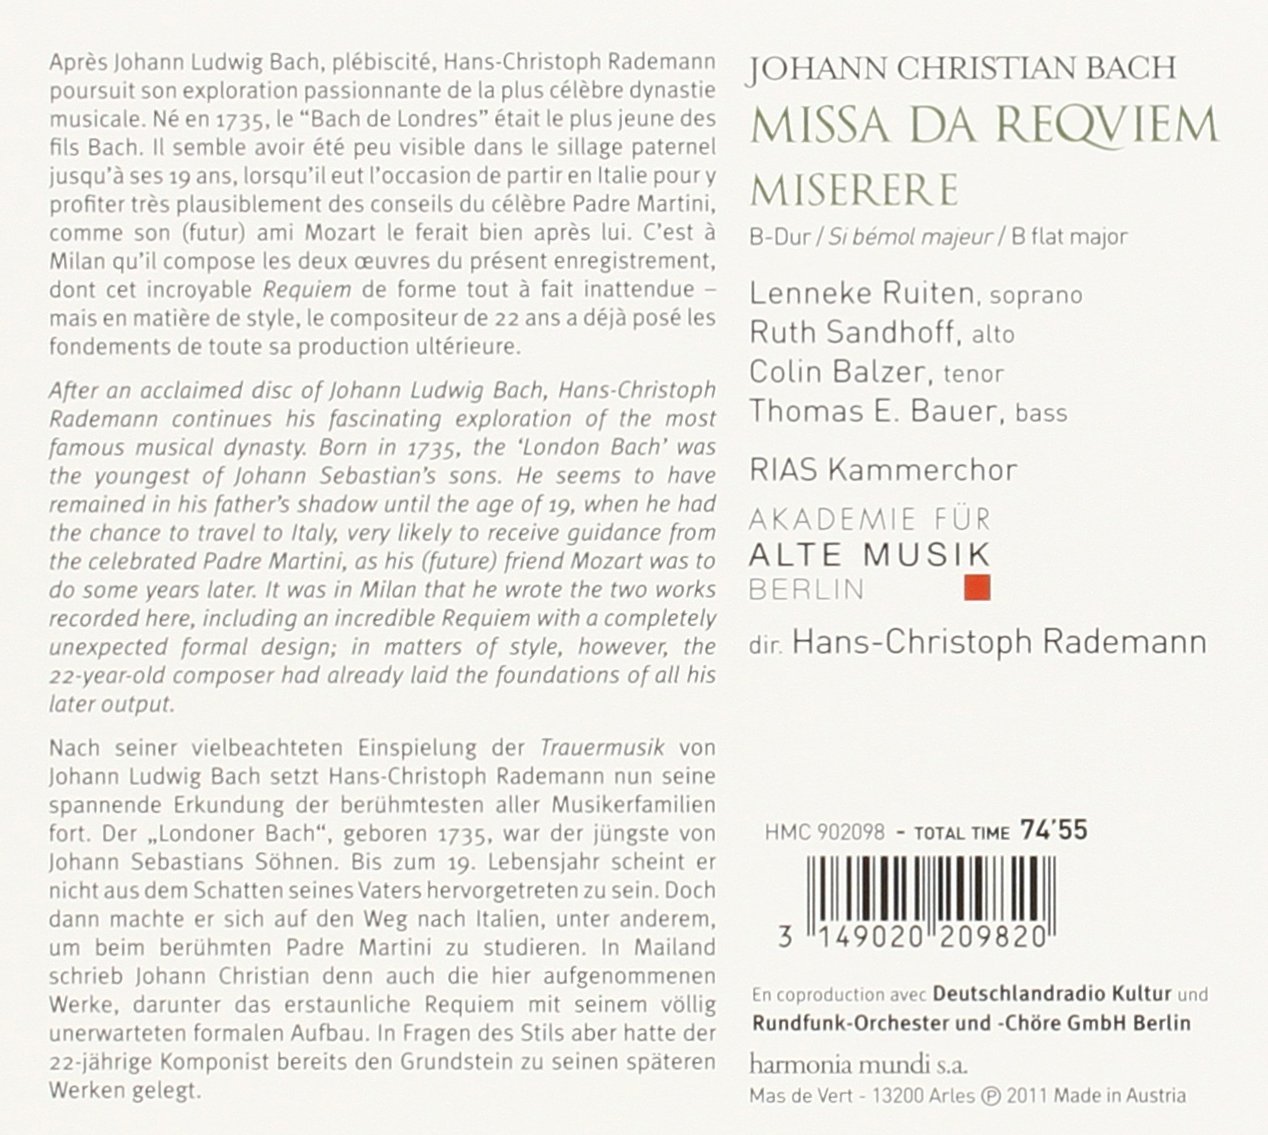 Bach, J.C.: Missa da Requiem, Miserere B-dur - slide-1